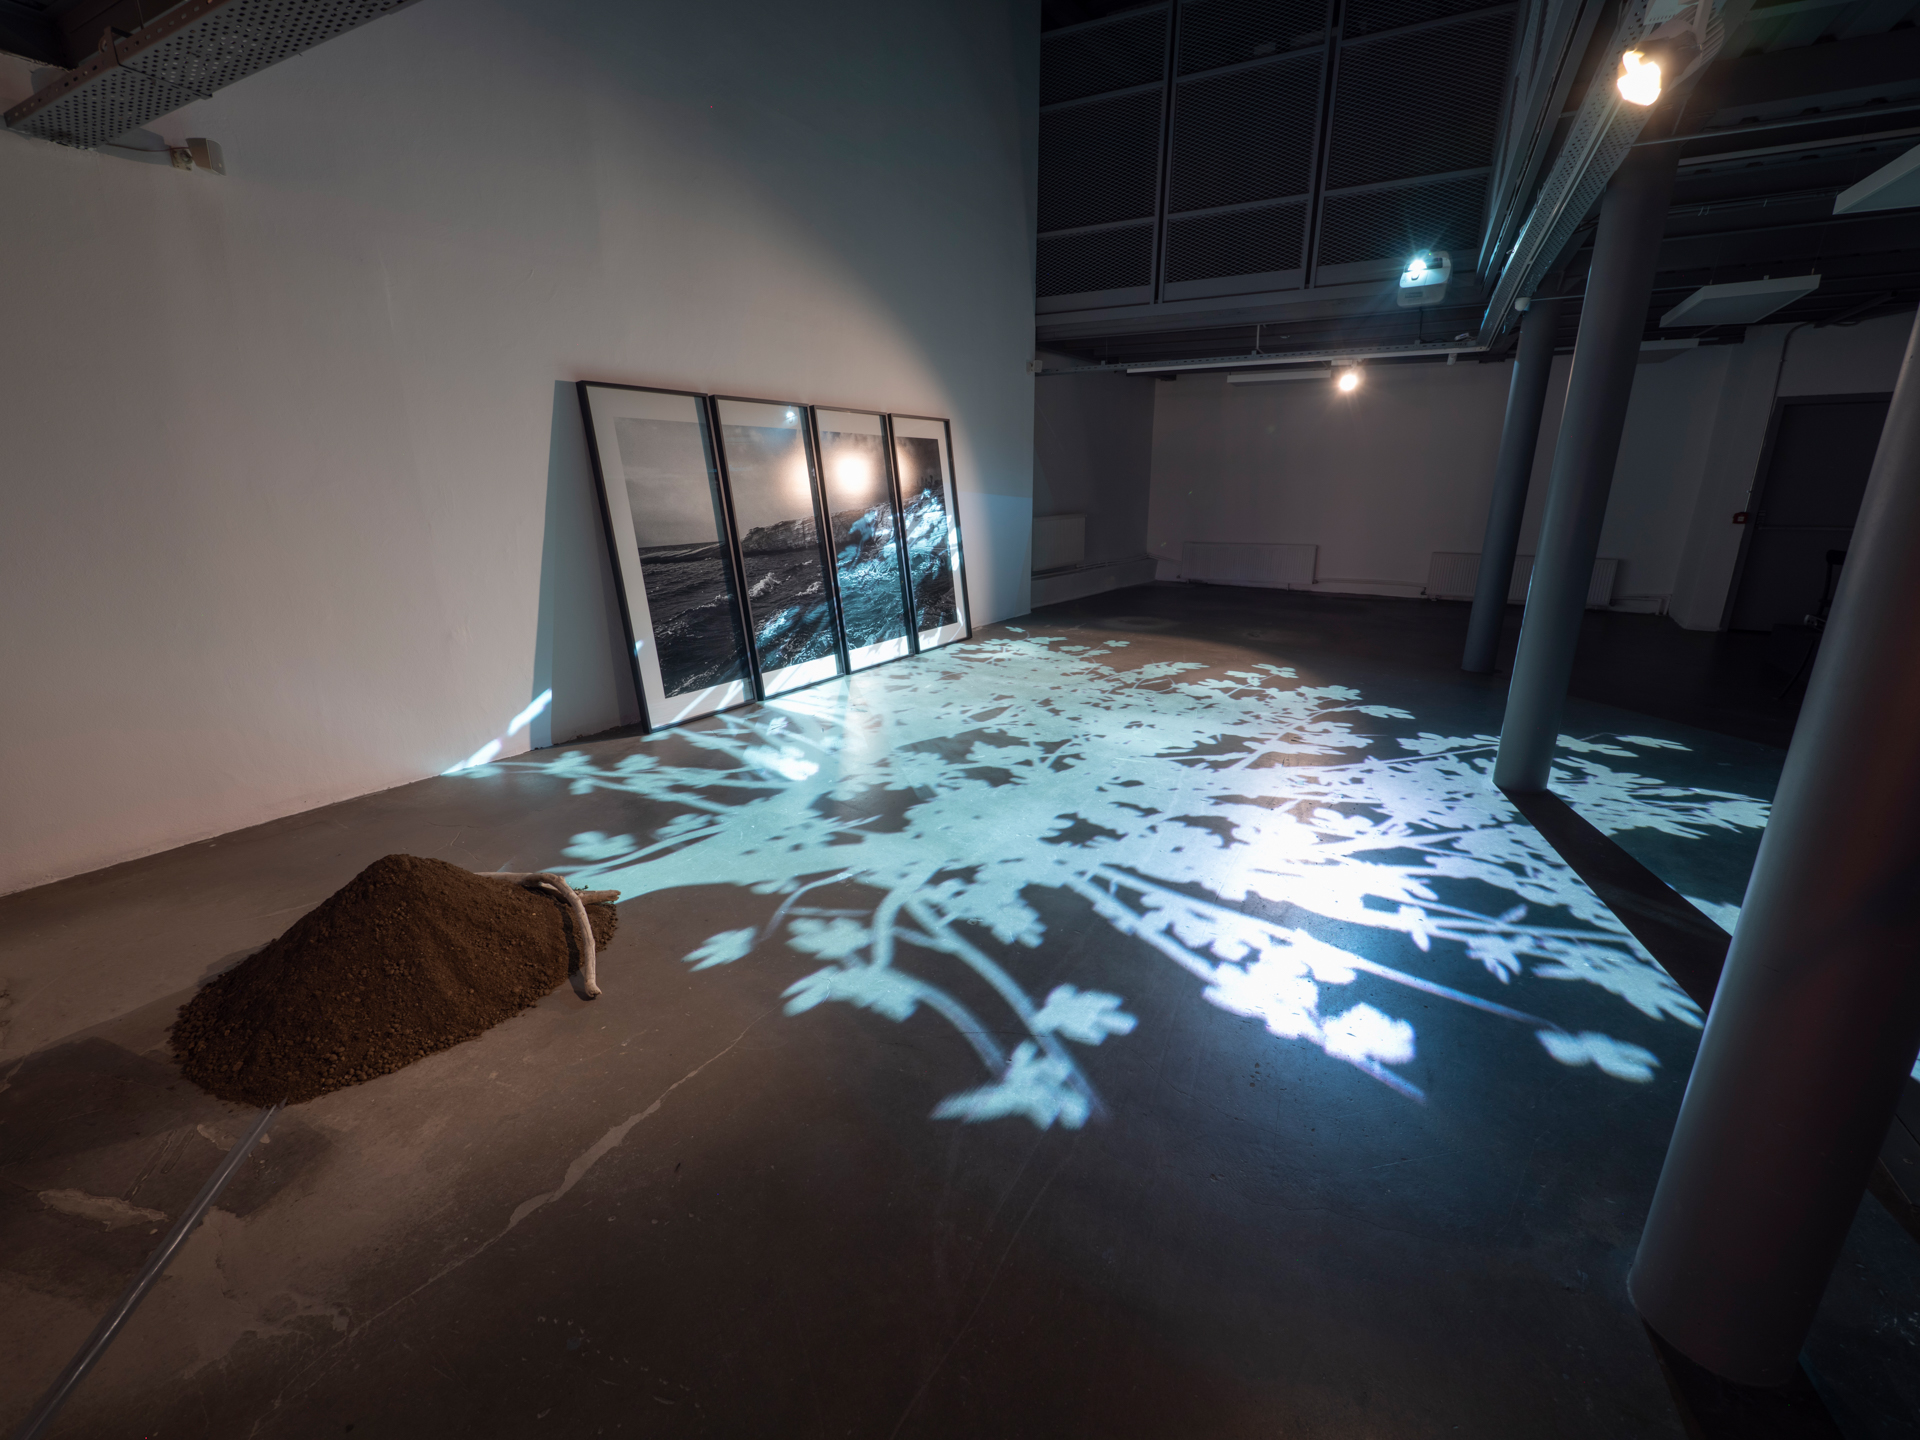 Begin To See Through The Darkness, 2020, Installation view, 180 x 90 cm (4 framed Images), Animation (30 min), soil, sound. 
Photo credit: Barış Özçetin